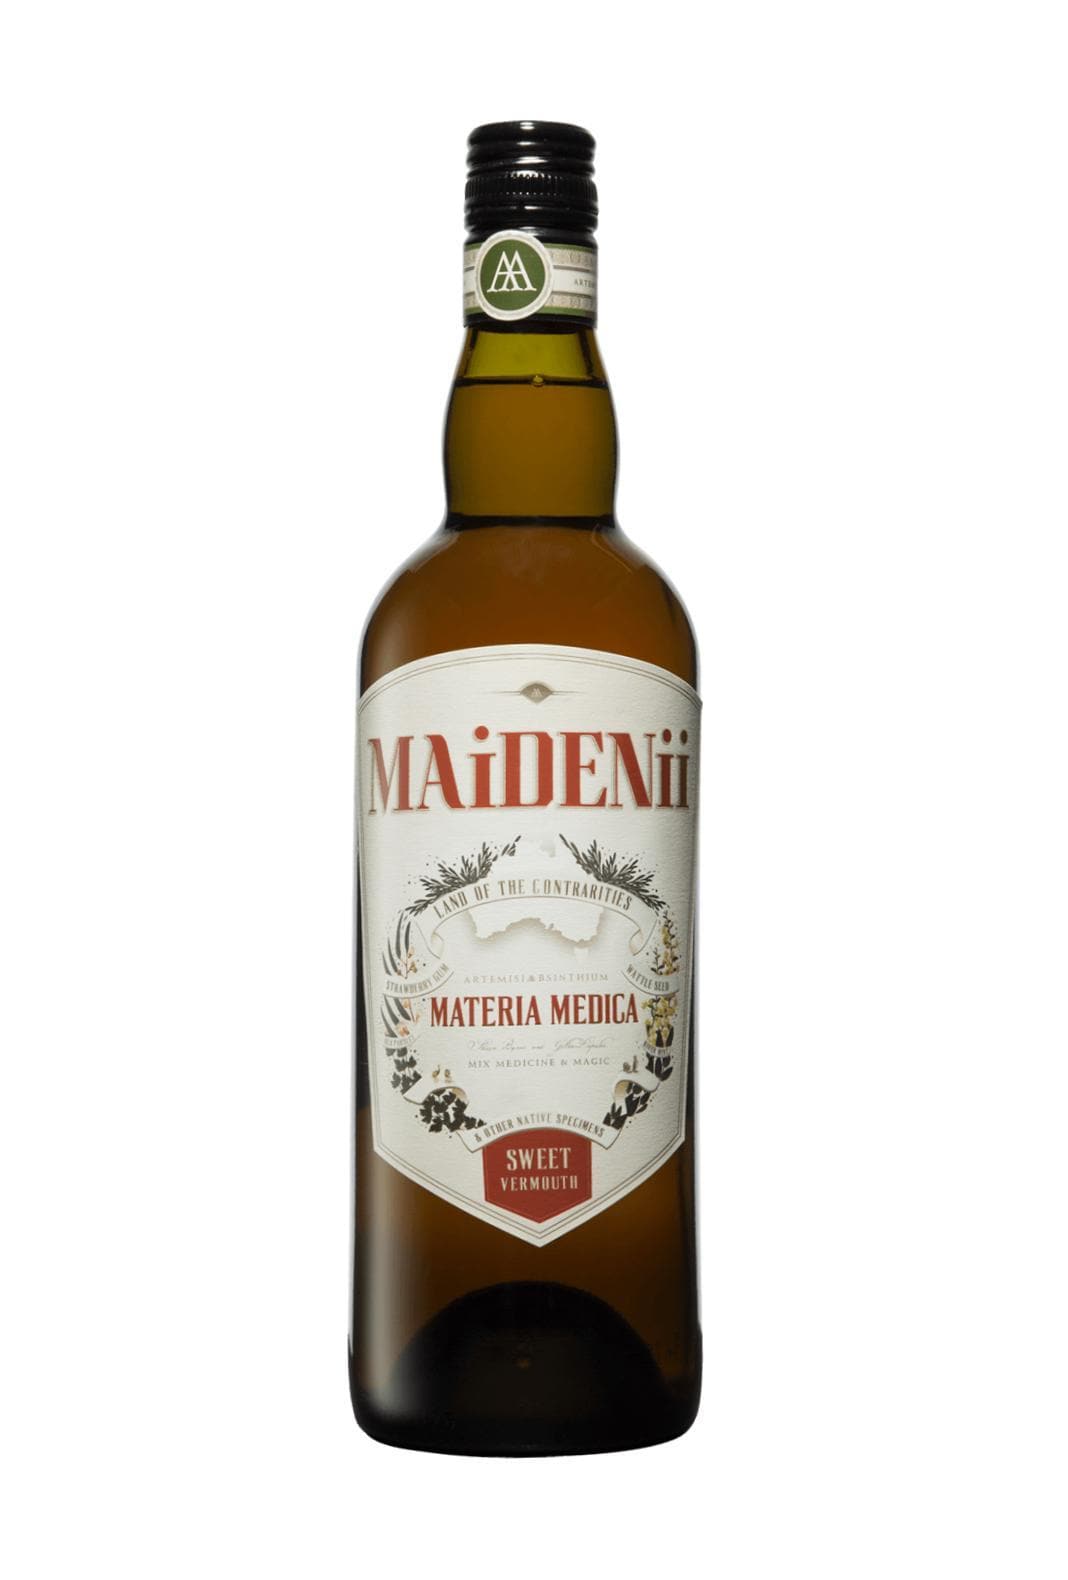 Maidenii Sweet Vermouth 750ml 16% | Liquor & Spirits | Shop online at Spirits of France